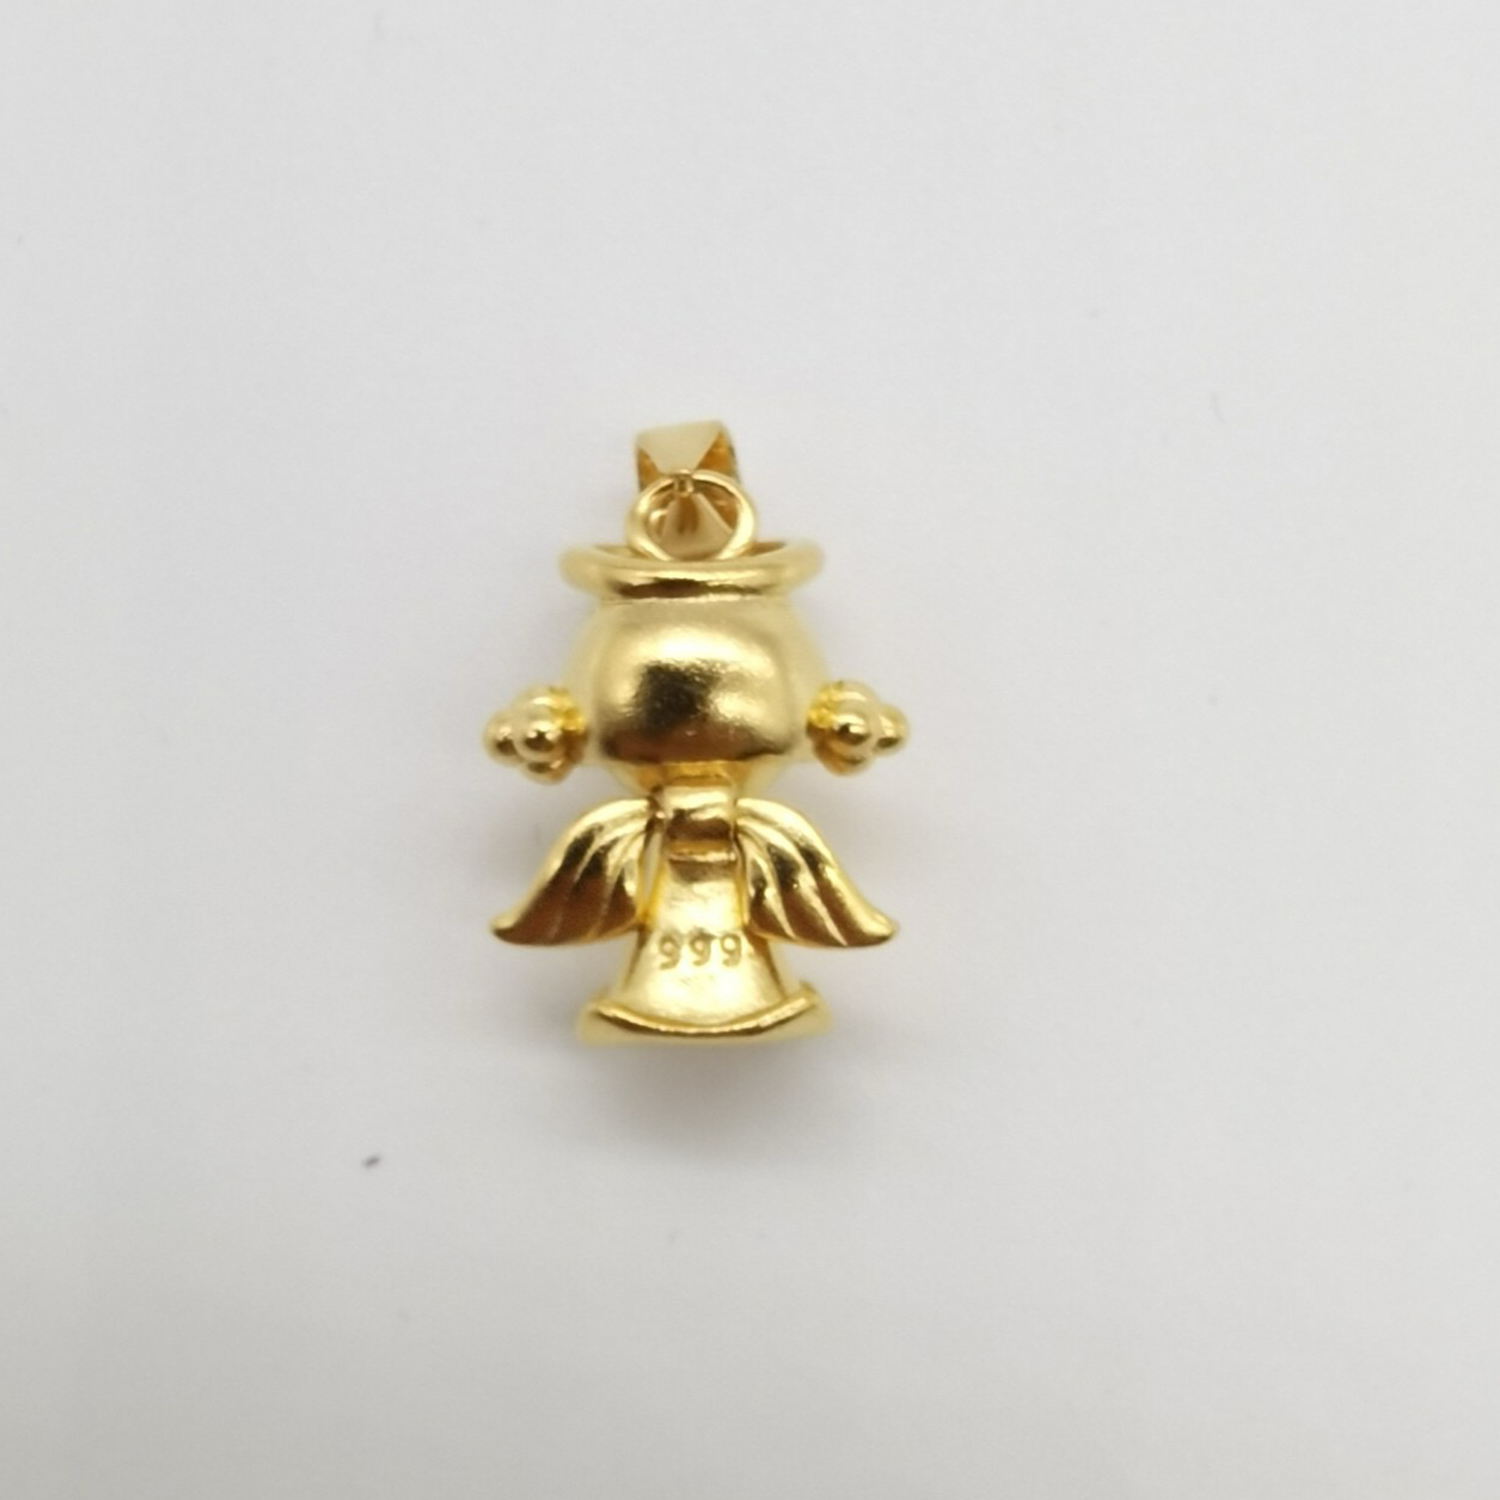 Alluvial gold vacuum electroplating 24K gold little angel love pendant